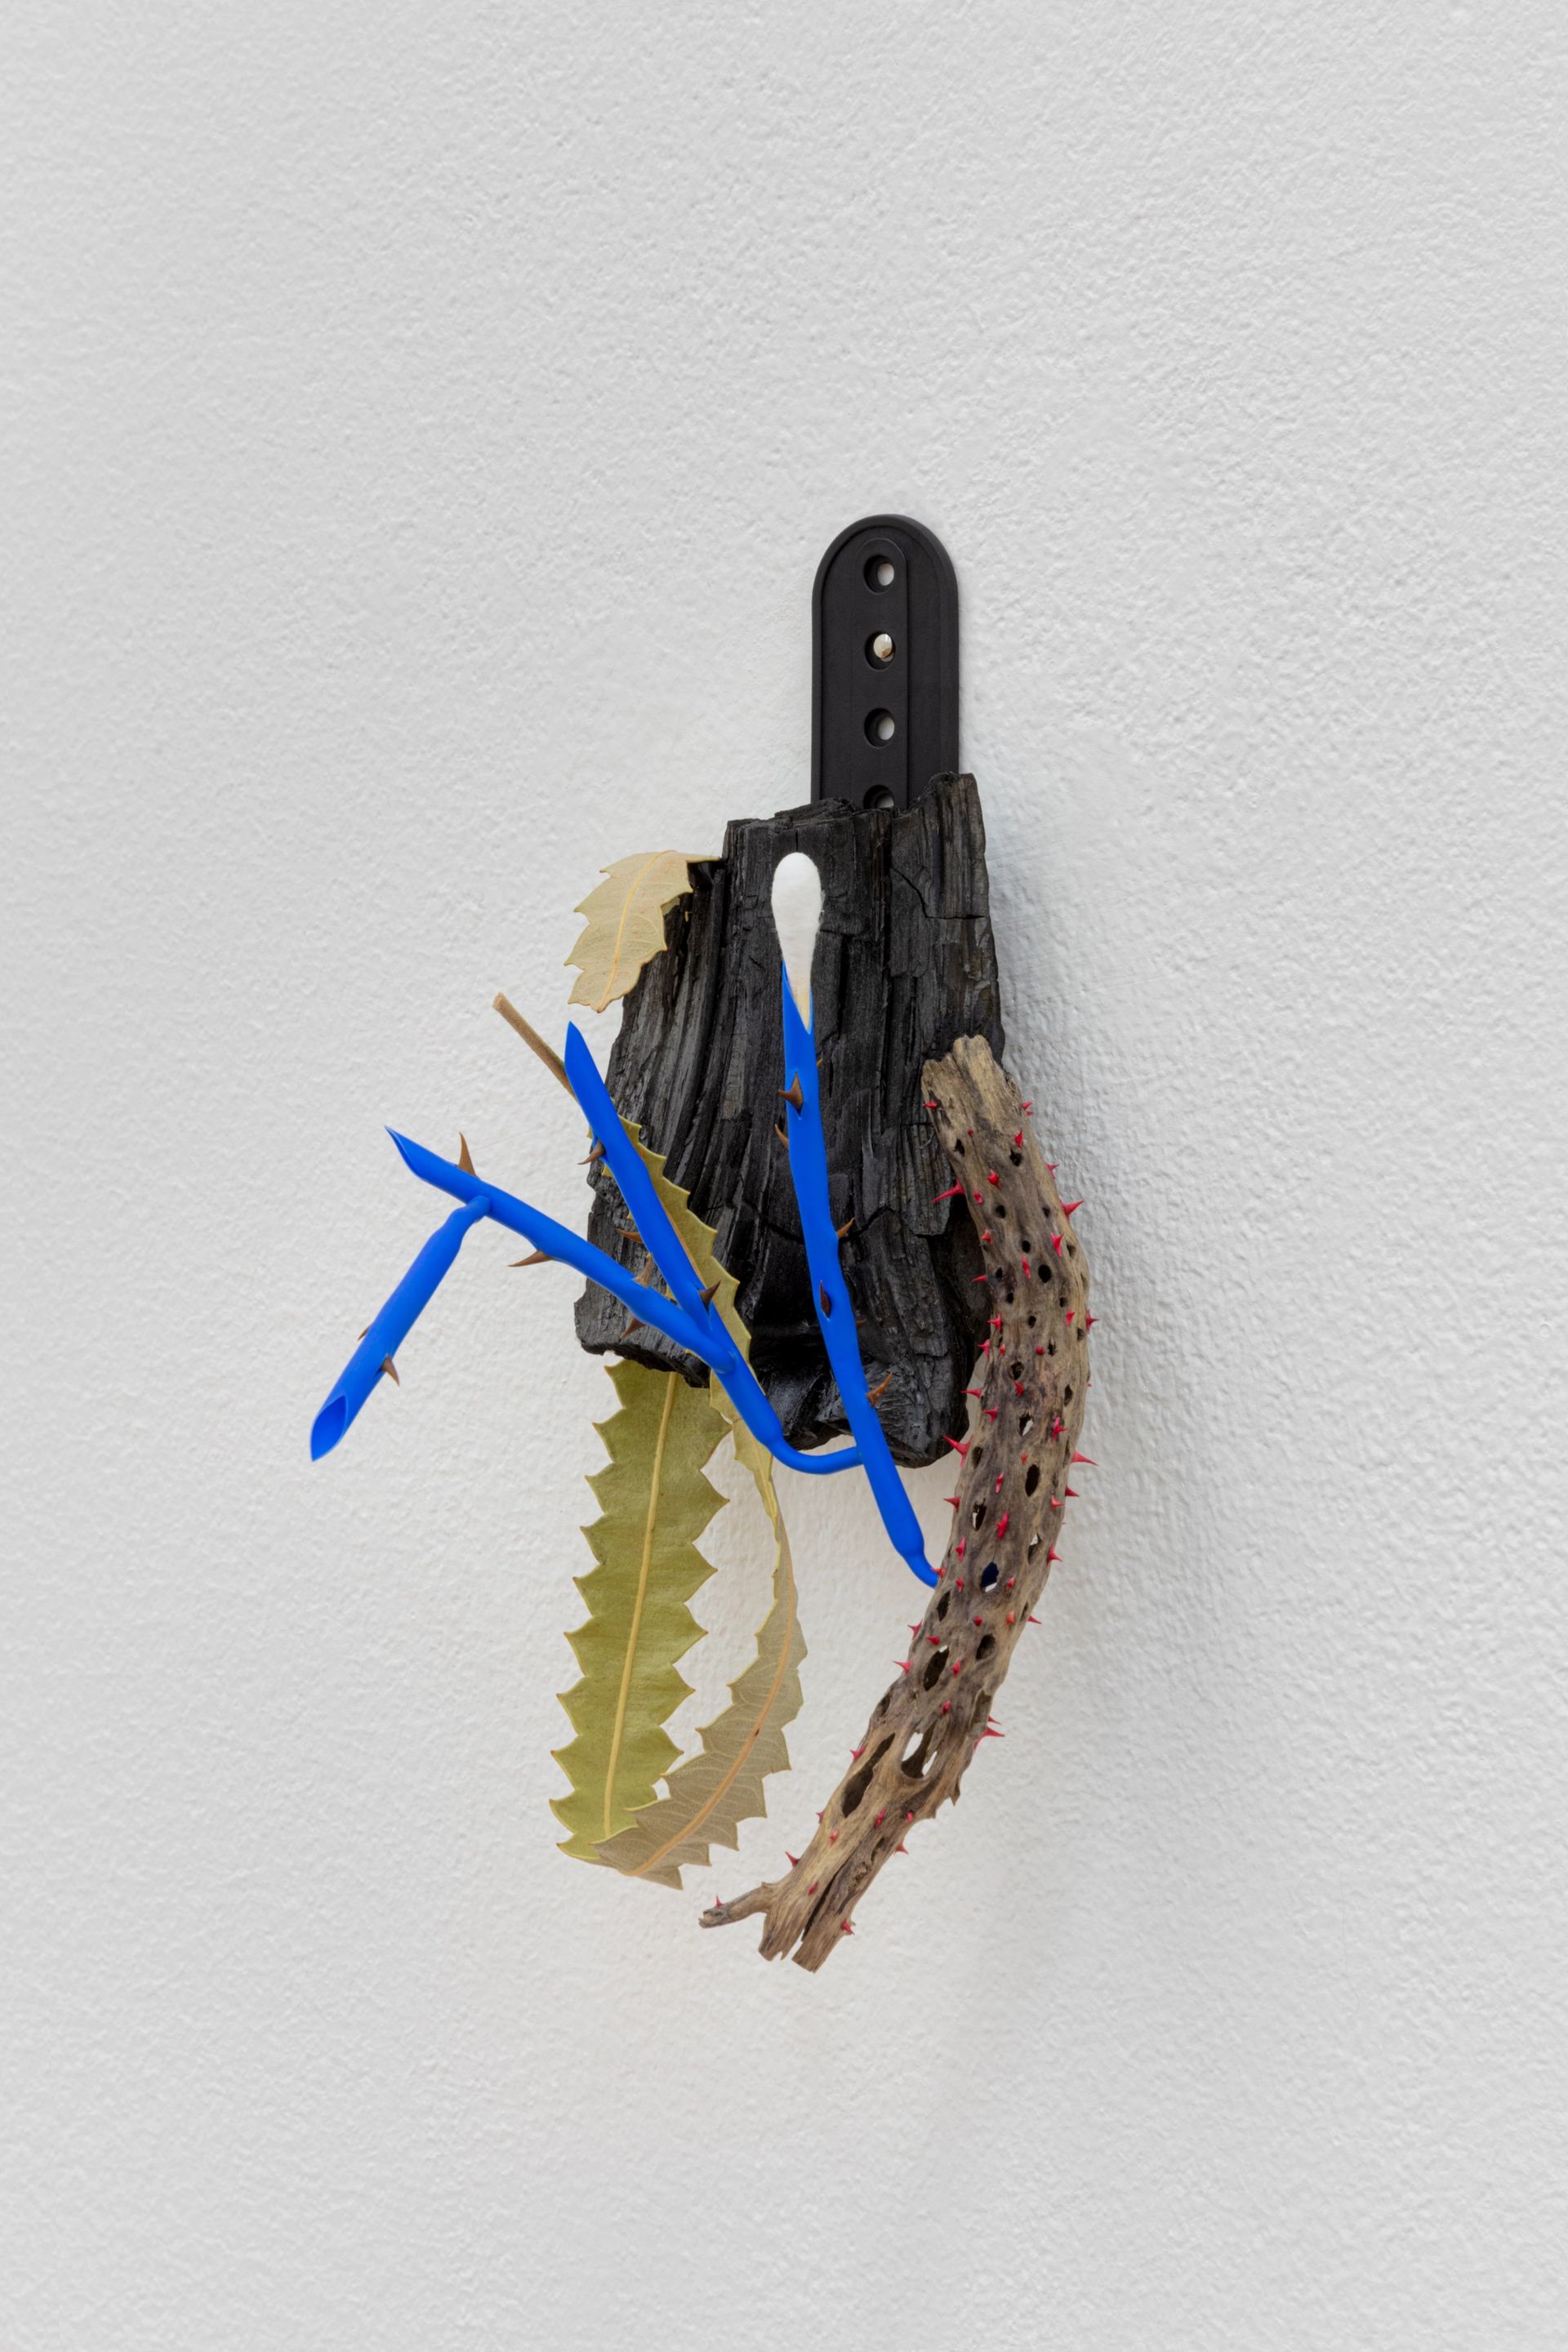 David Fesl, Untitled, 2021, cap buckle, spruce wood, banksia leaf, driftwood, thistle thorns, heat shrink tube, rosehip thorns, cotton swab, 16.5 × 7.3 × 8.3 cm, photo: Sebastian Kissel